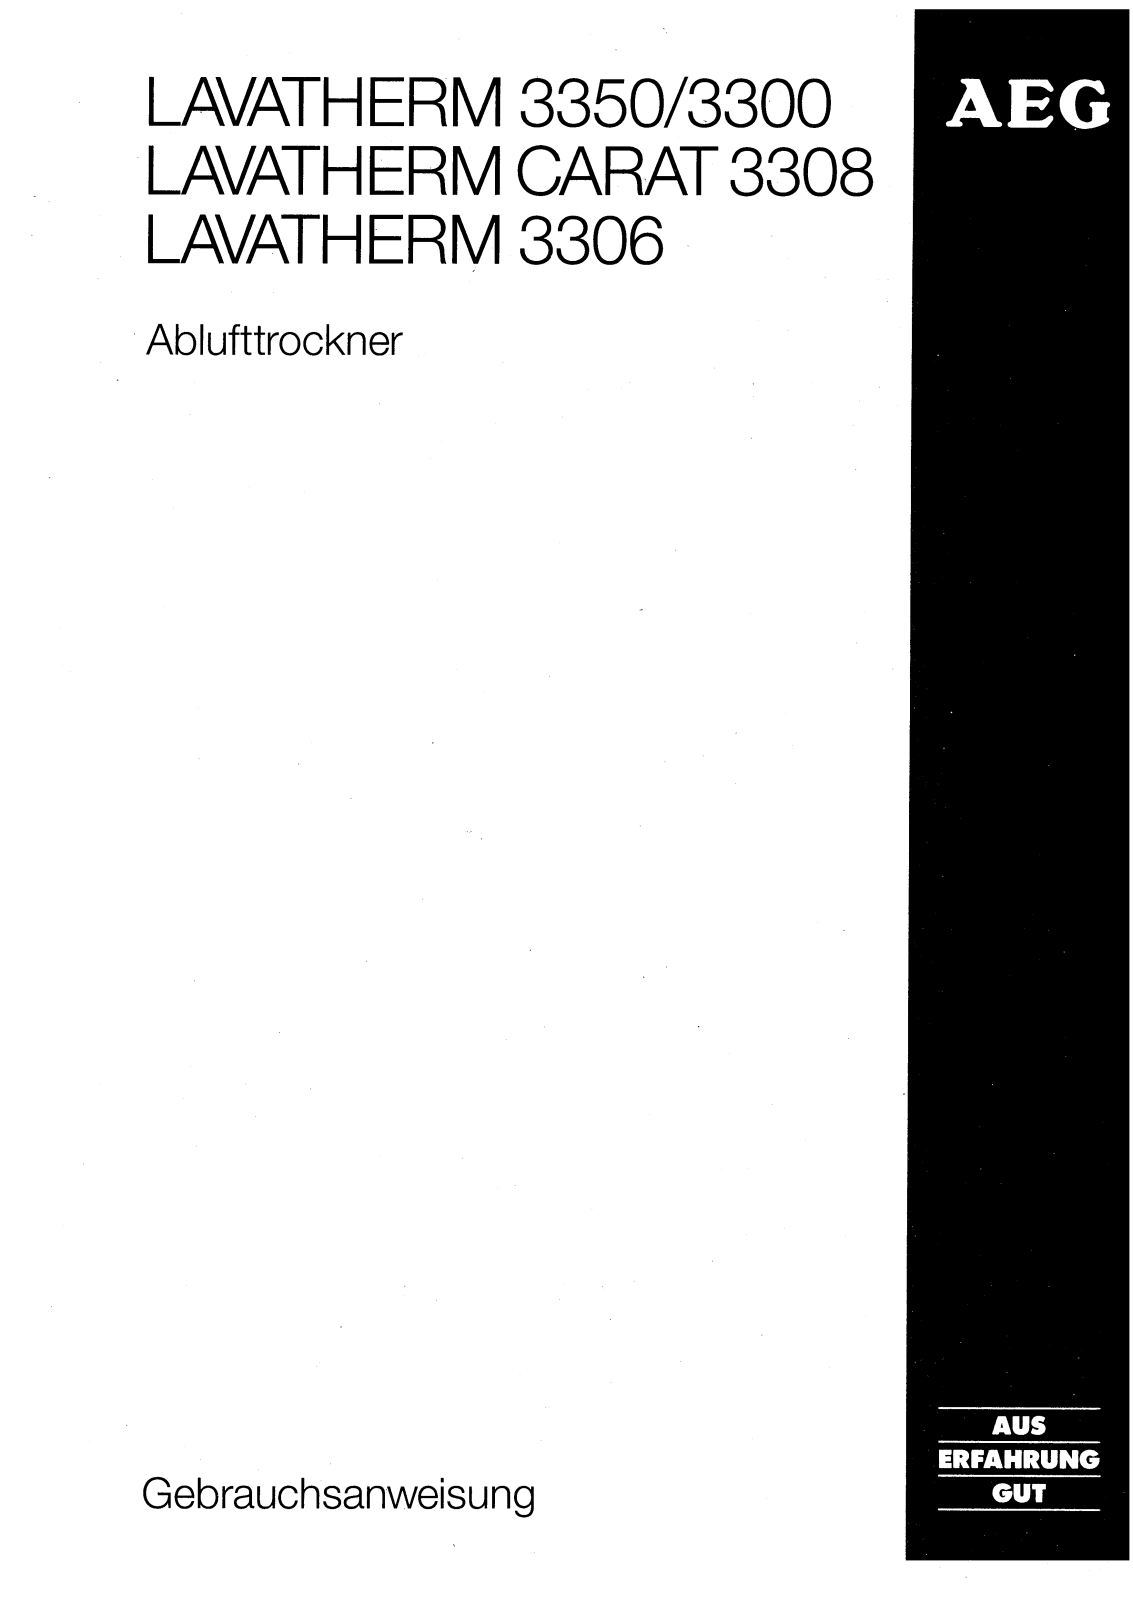 AEG LAVATHERM 3300 User Manual